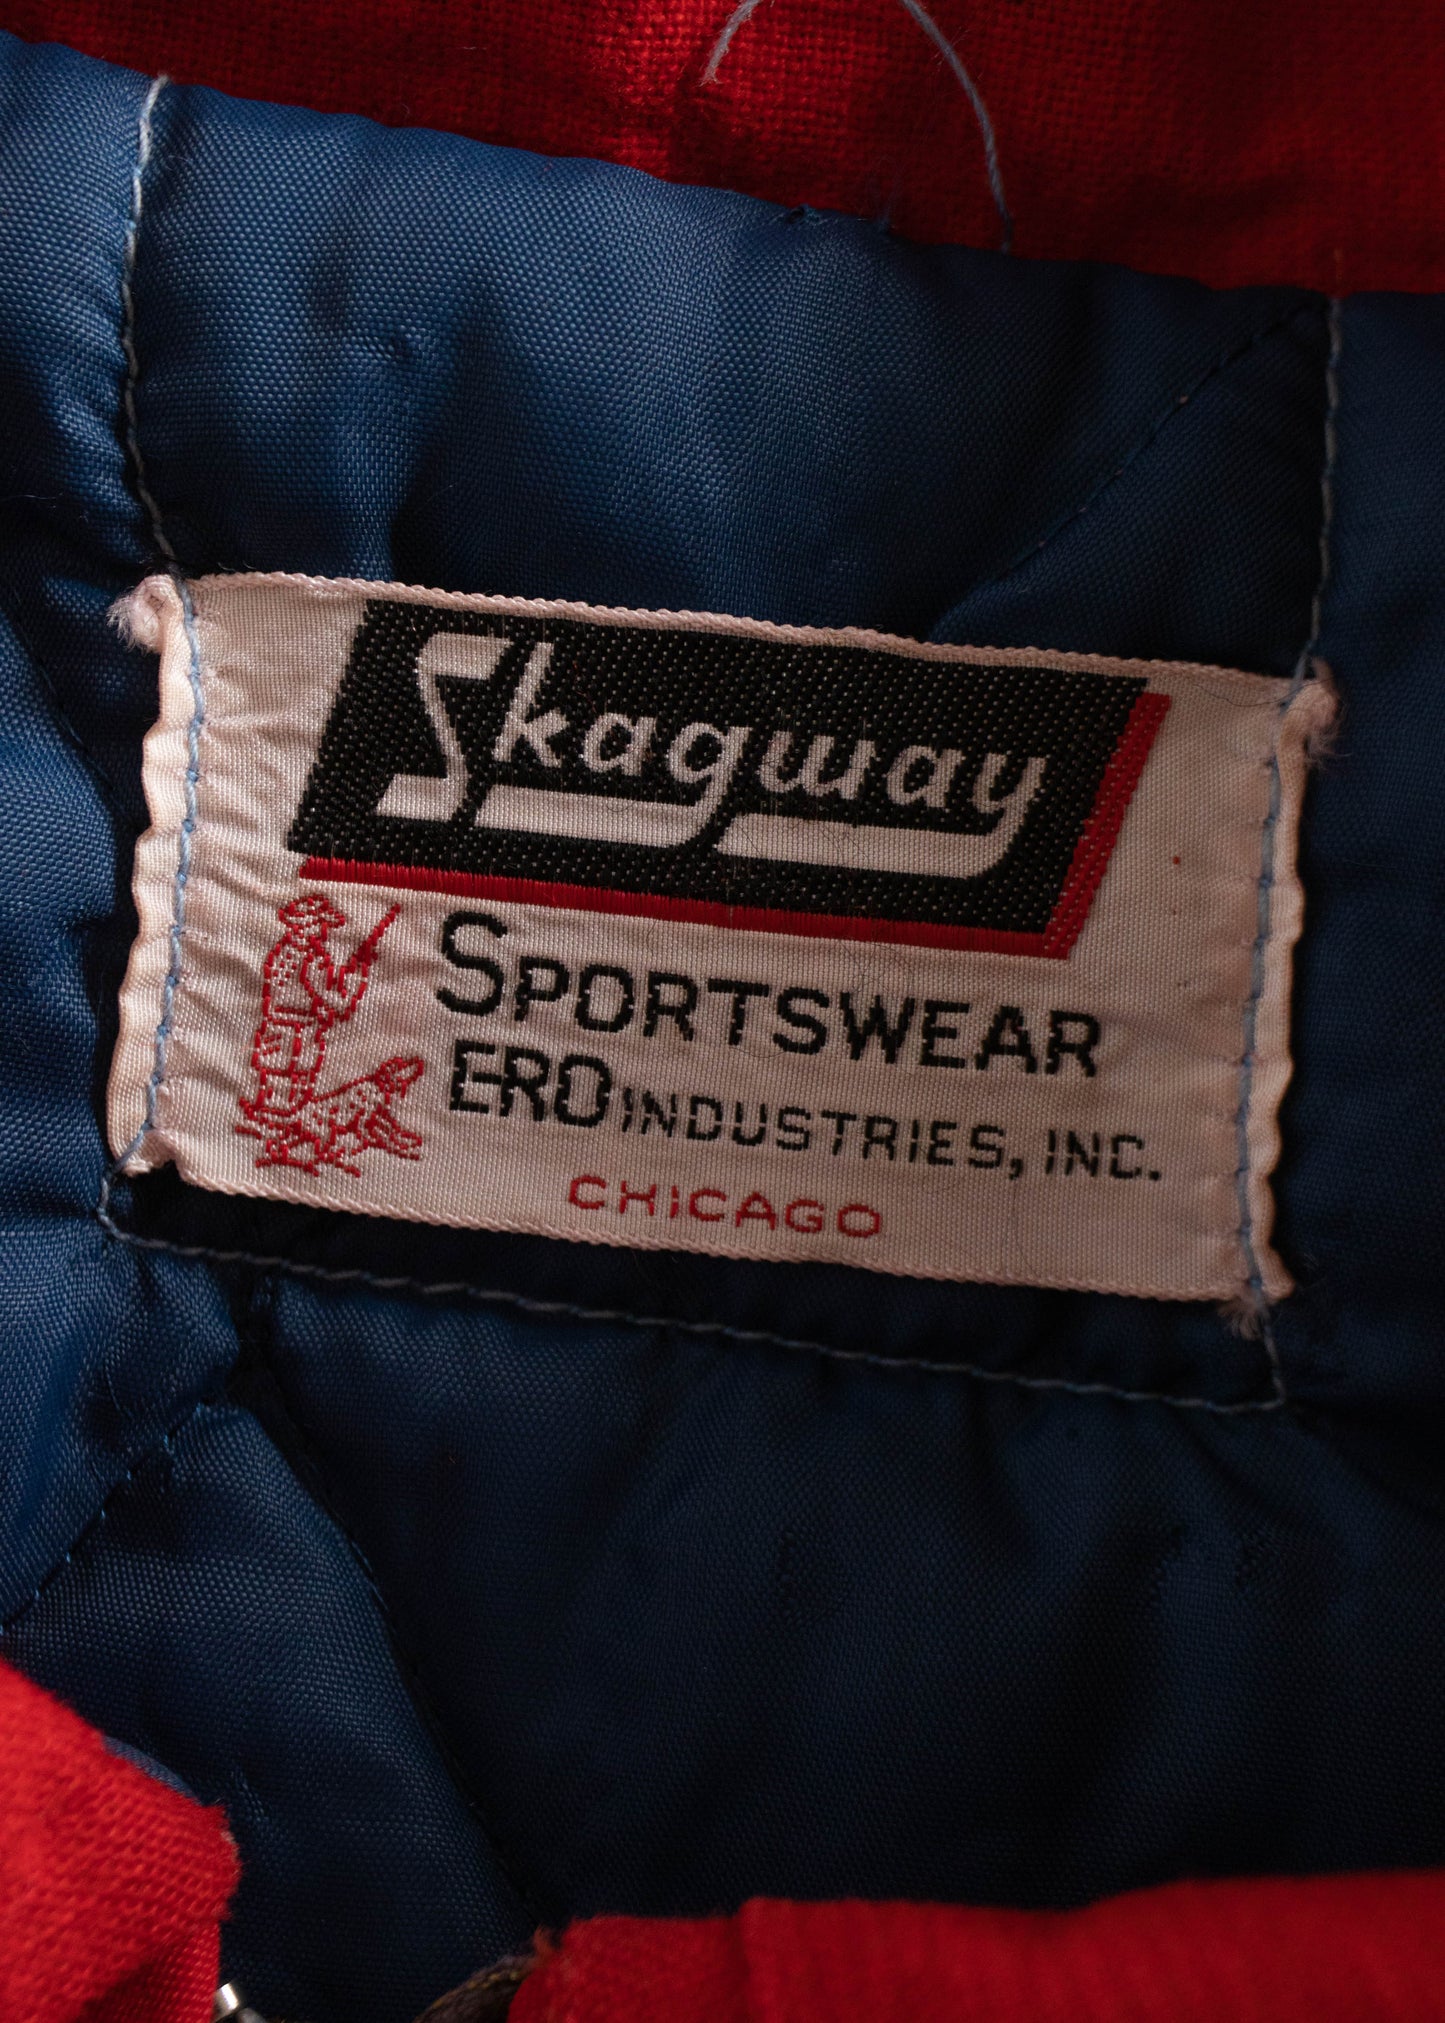 1980s Skagway Sportswear Ero Industries Parka Jacket Size L/XL